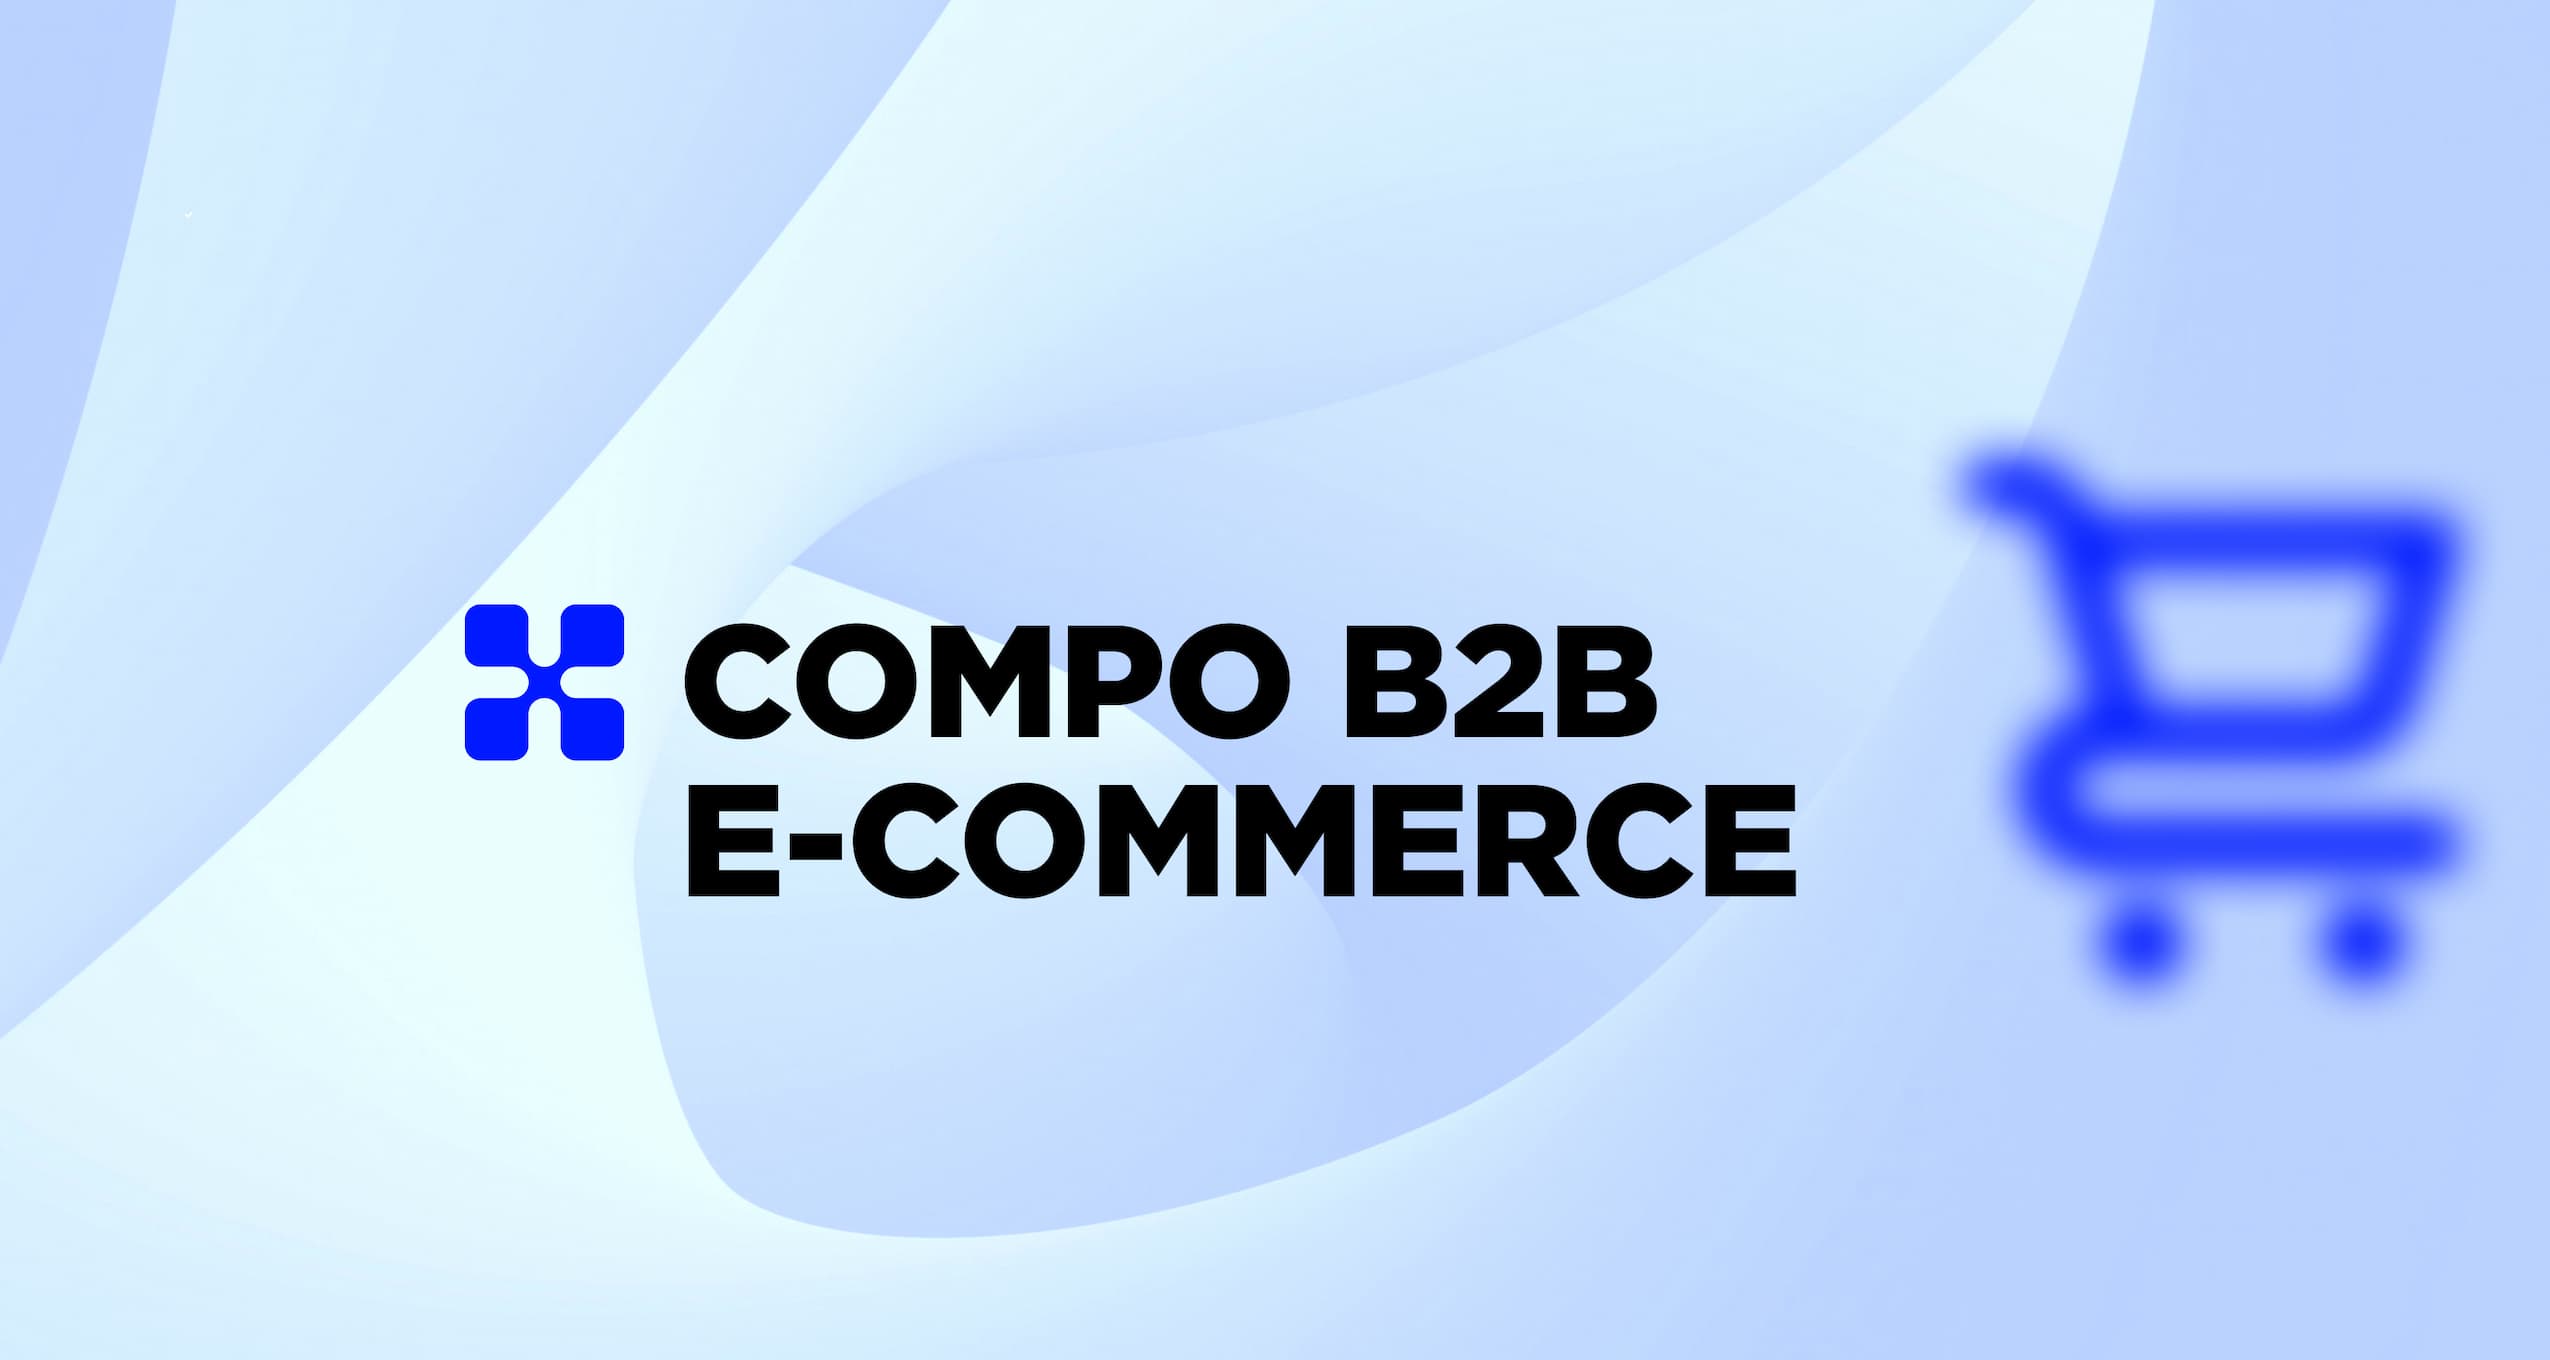 Compo B2B E-commerce